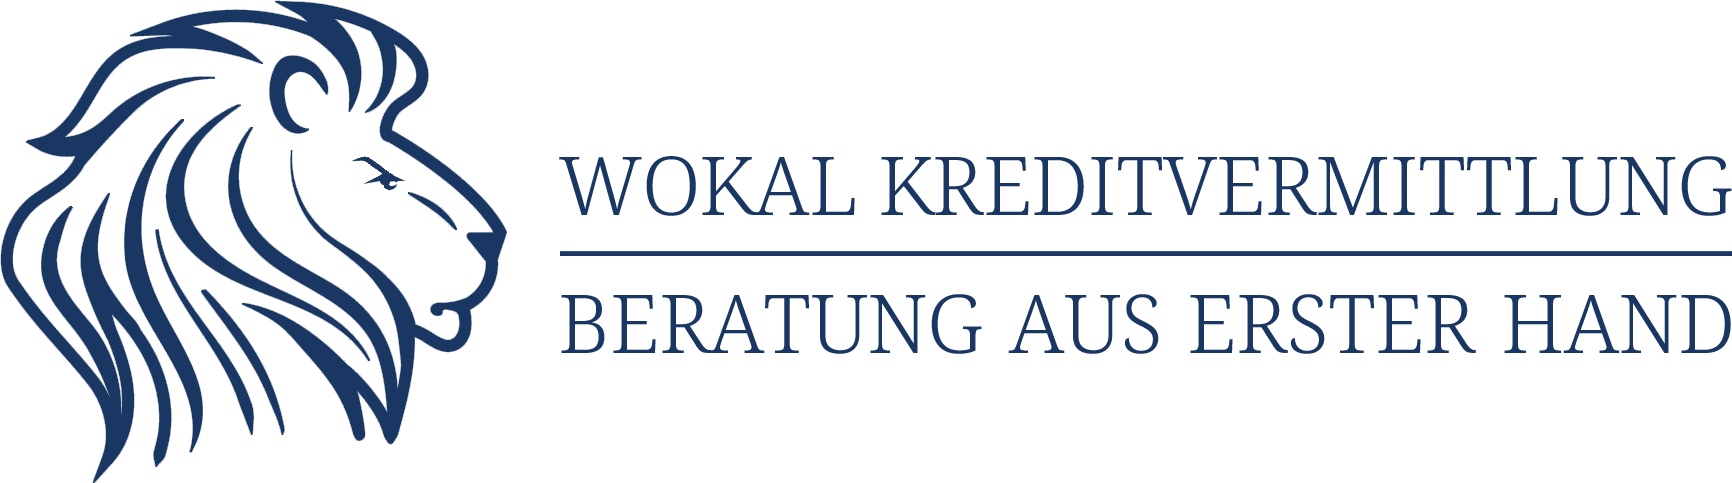 Wokal Kreditvermittlung GmbH - Logo